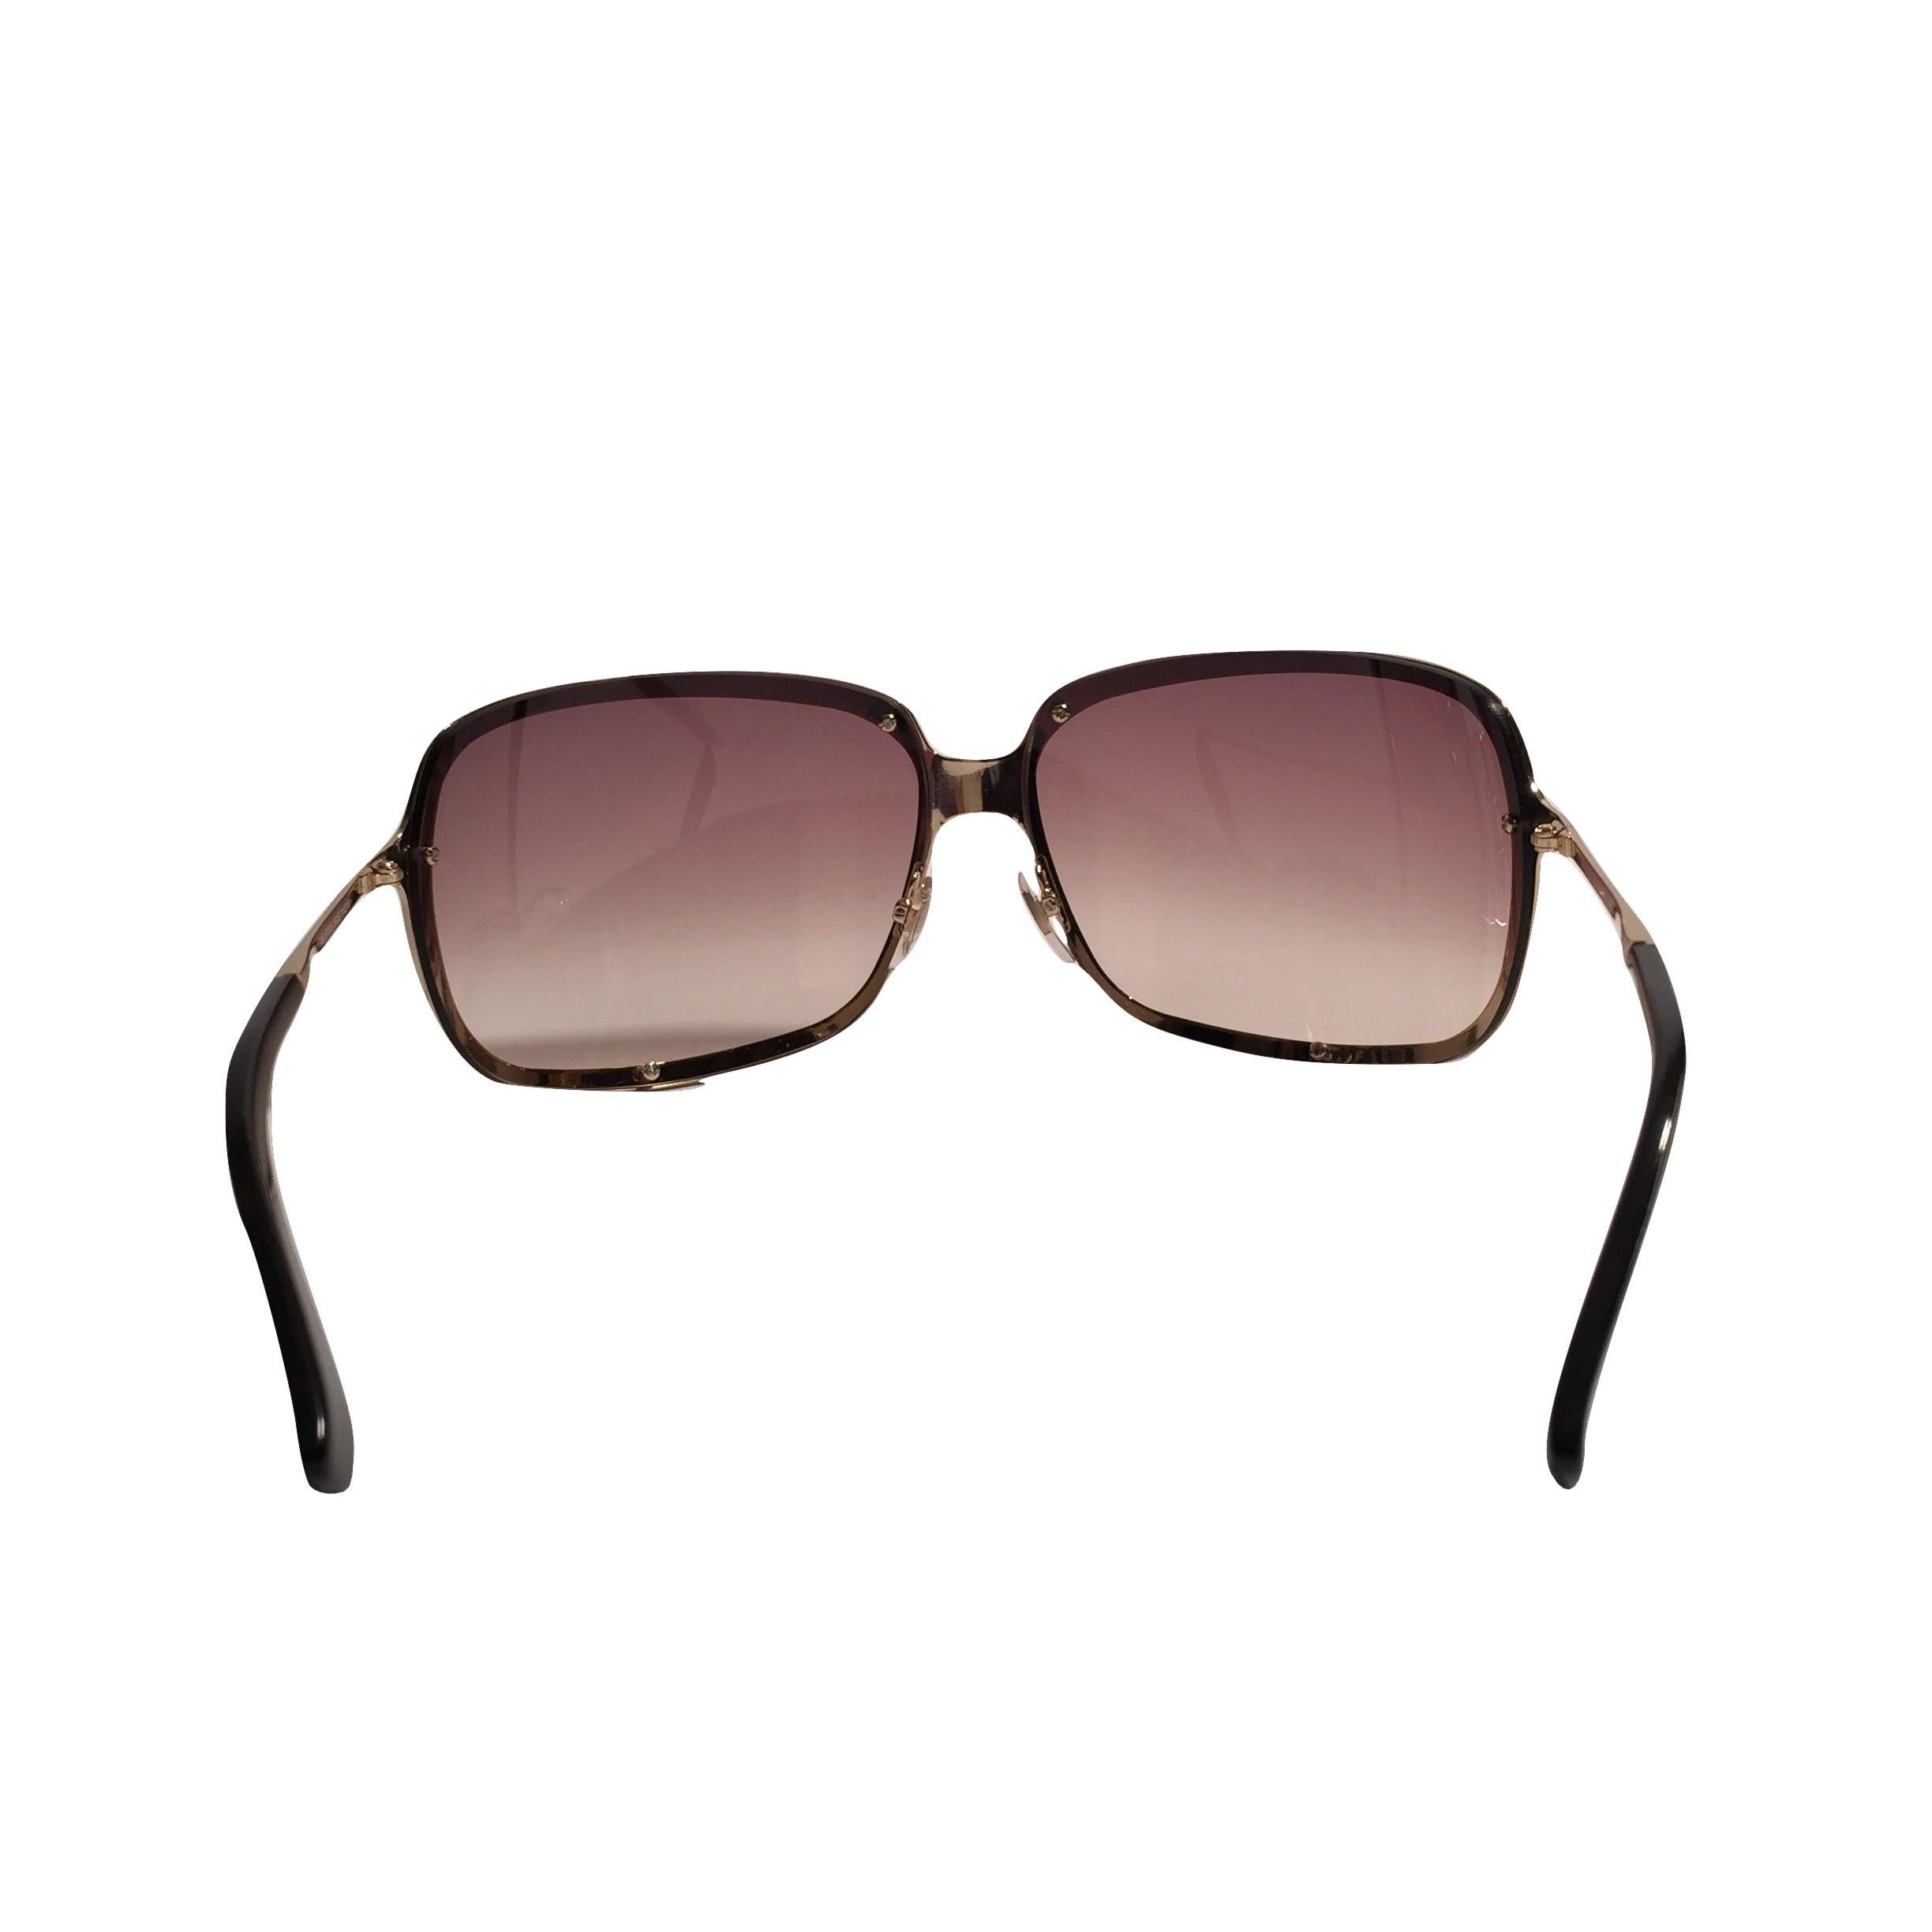 New Yves Saint Laurent YSL Gold Wrap Sunglasses W/ Case 2